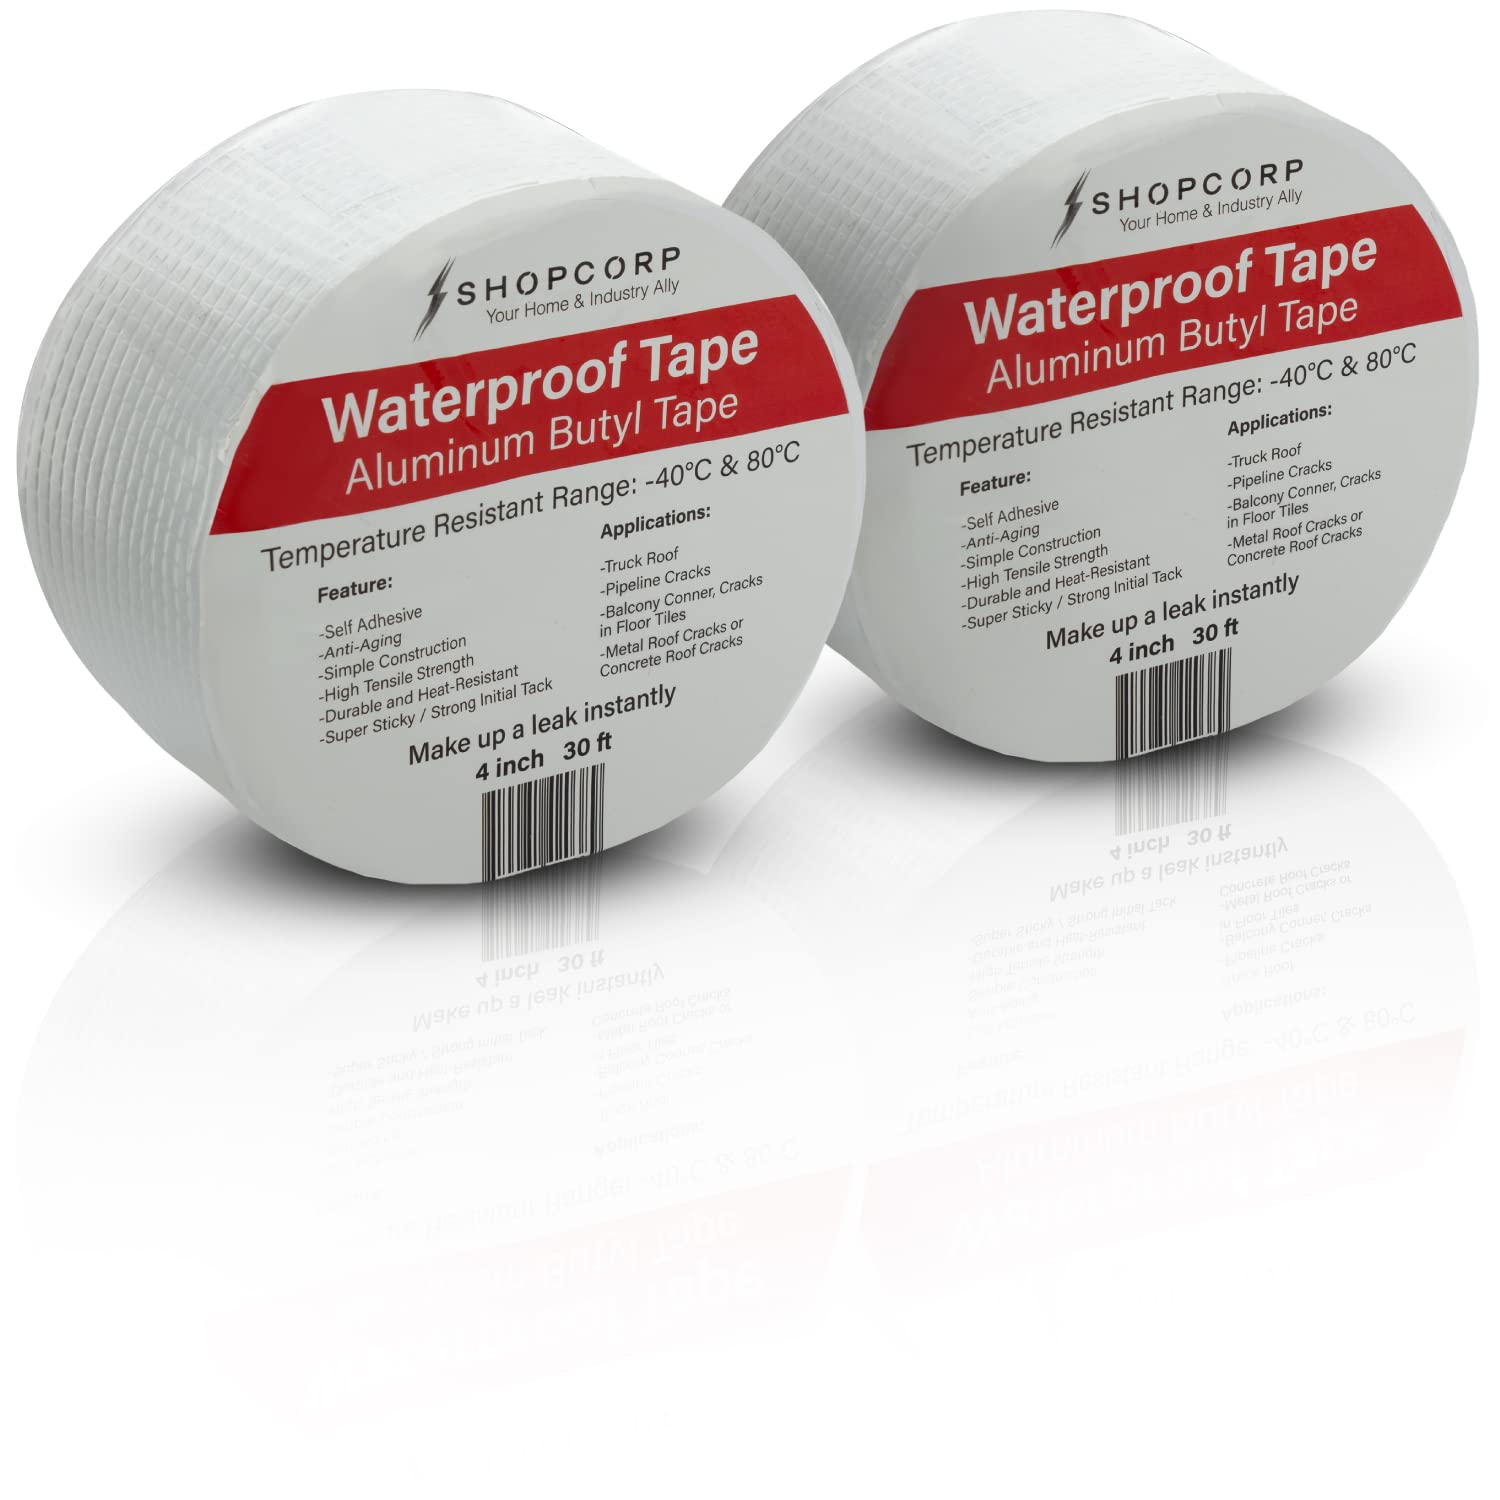 Waterproof tape